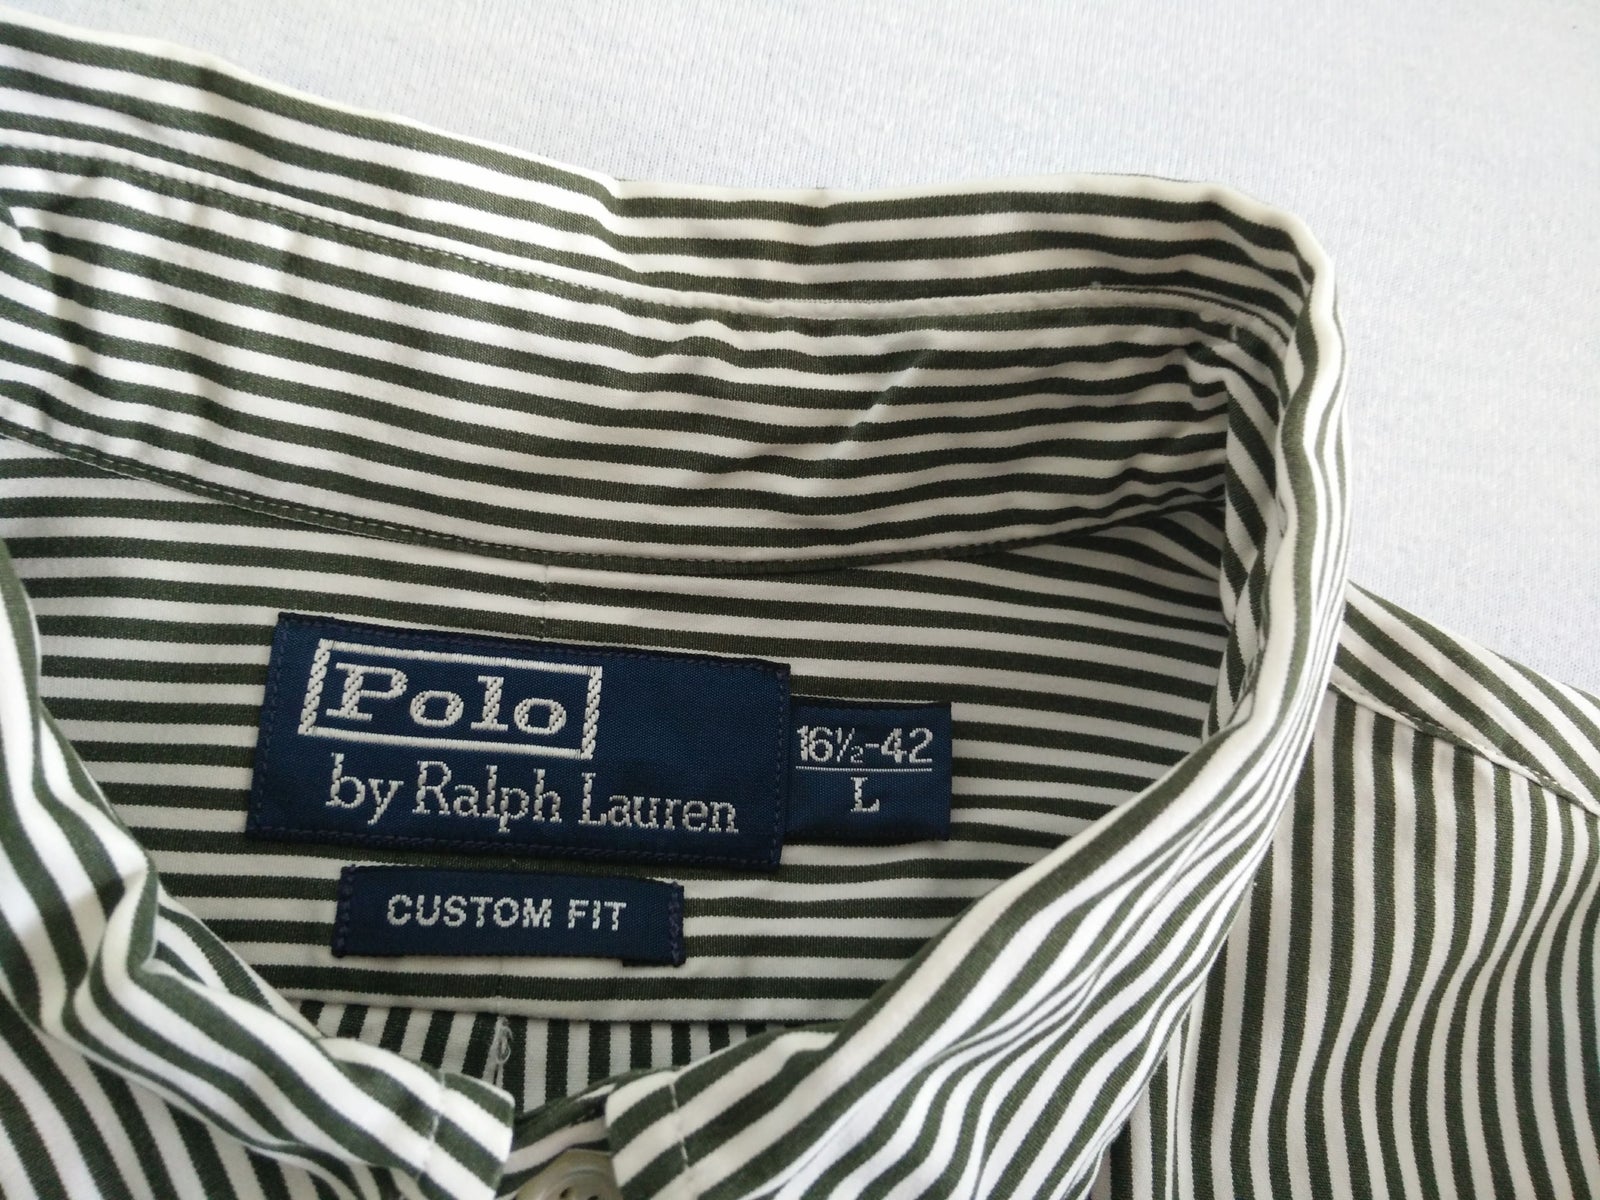 Skjorte, Ralph Lauren, str. L